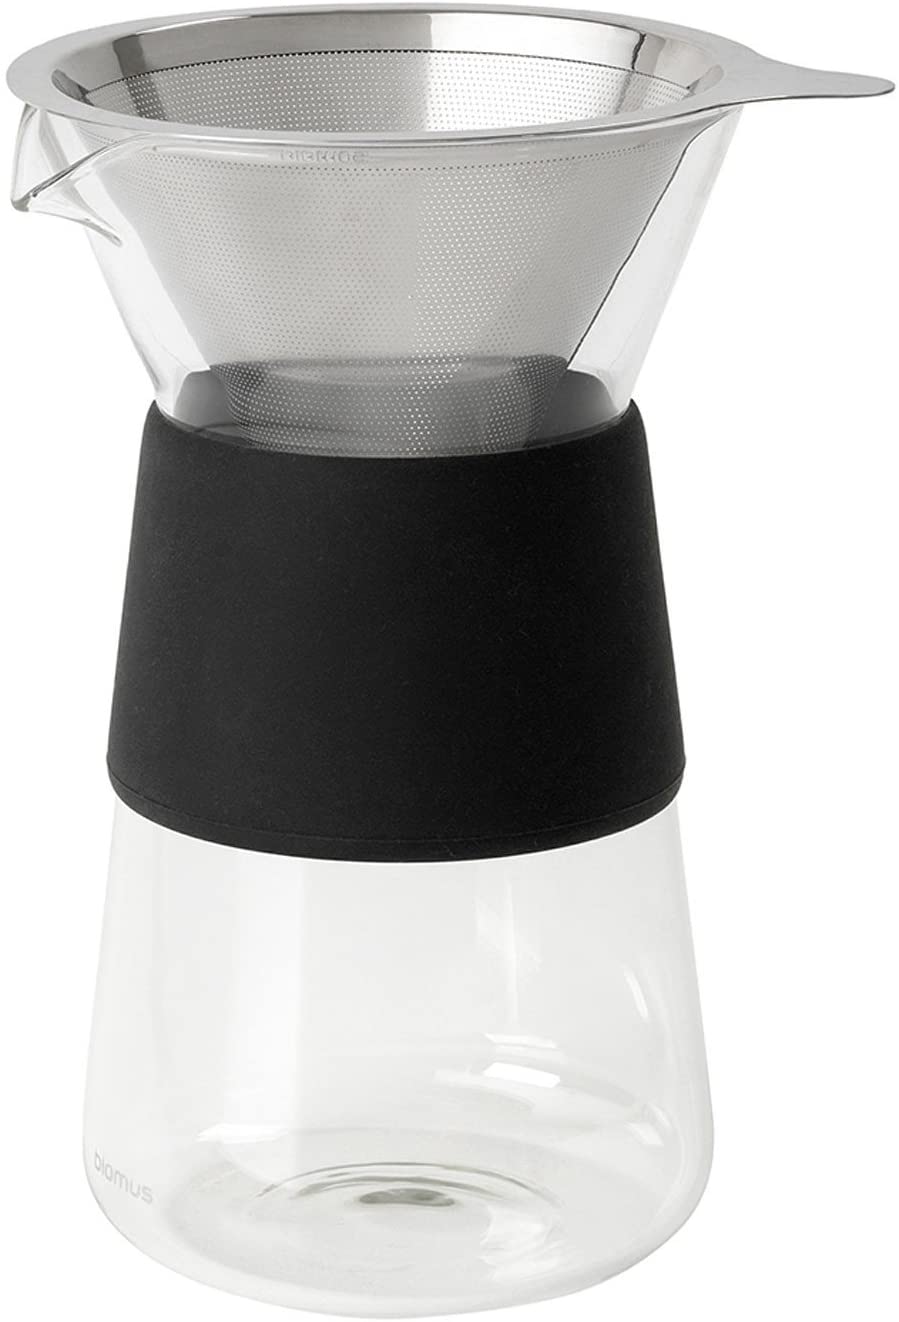 Blomus 63690 S Graneo Coffee Maker Glass